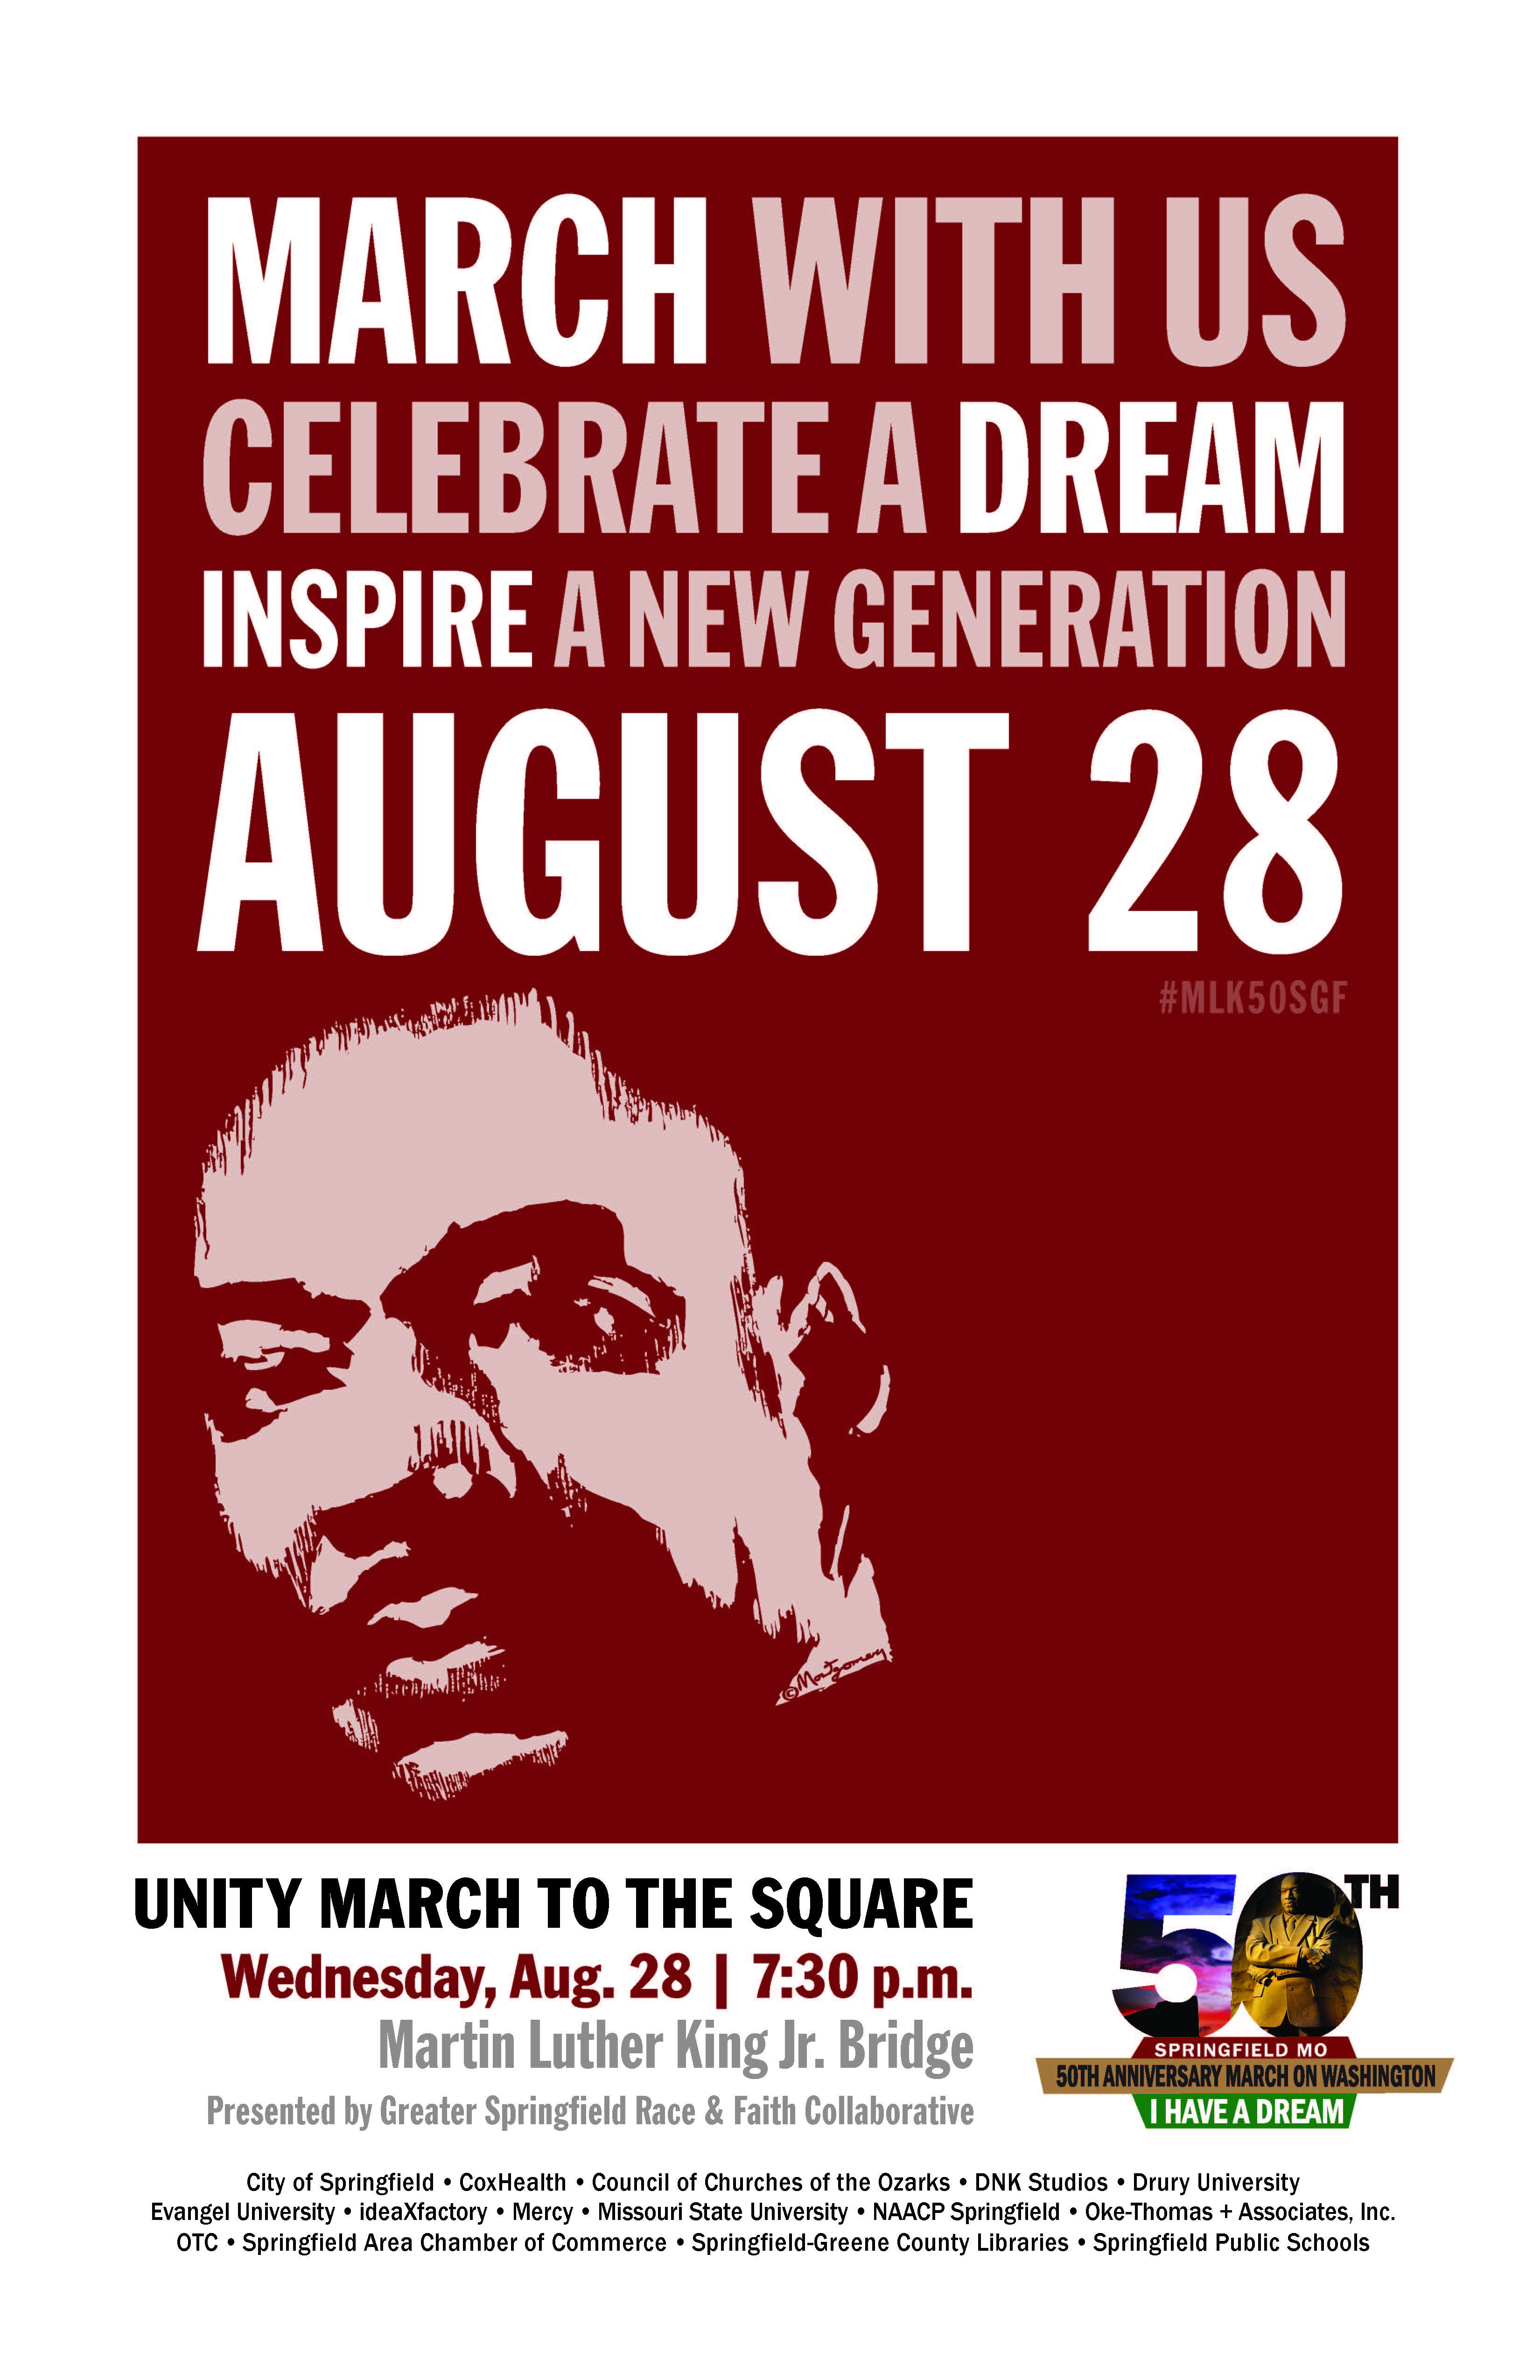 MLK 50th Anniversary Unity March